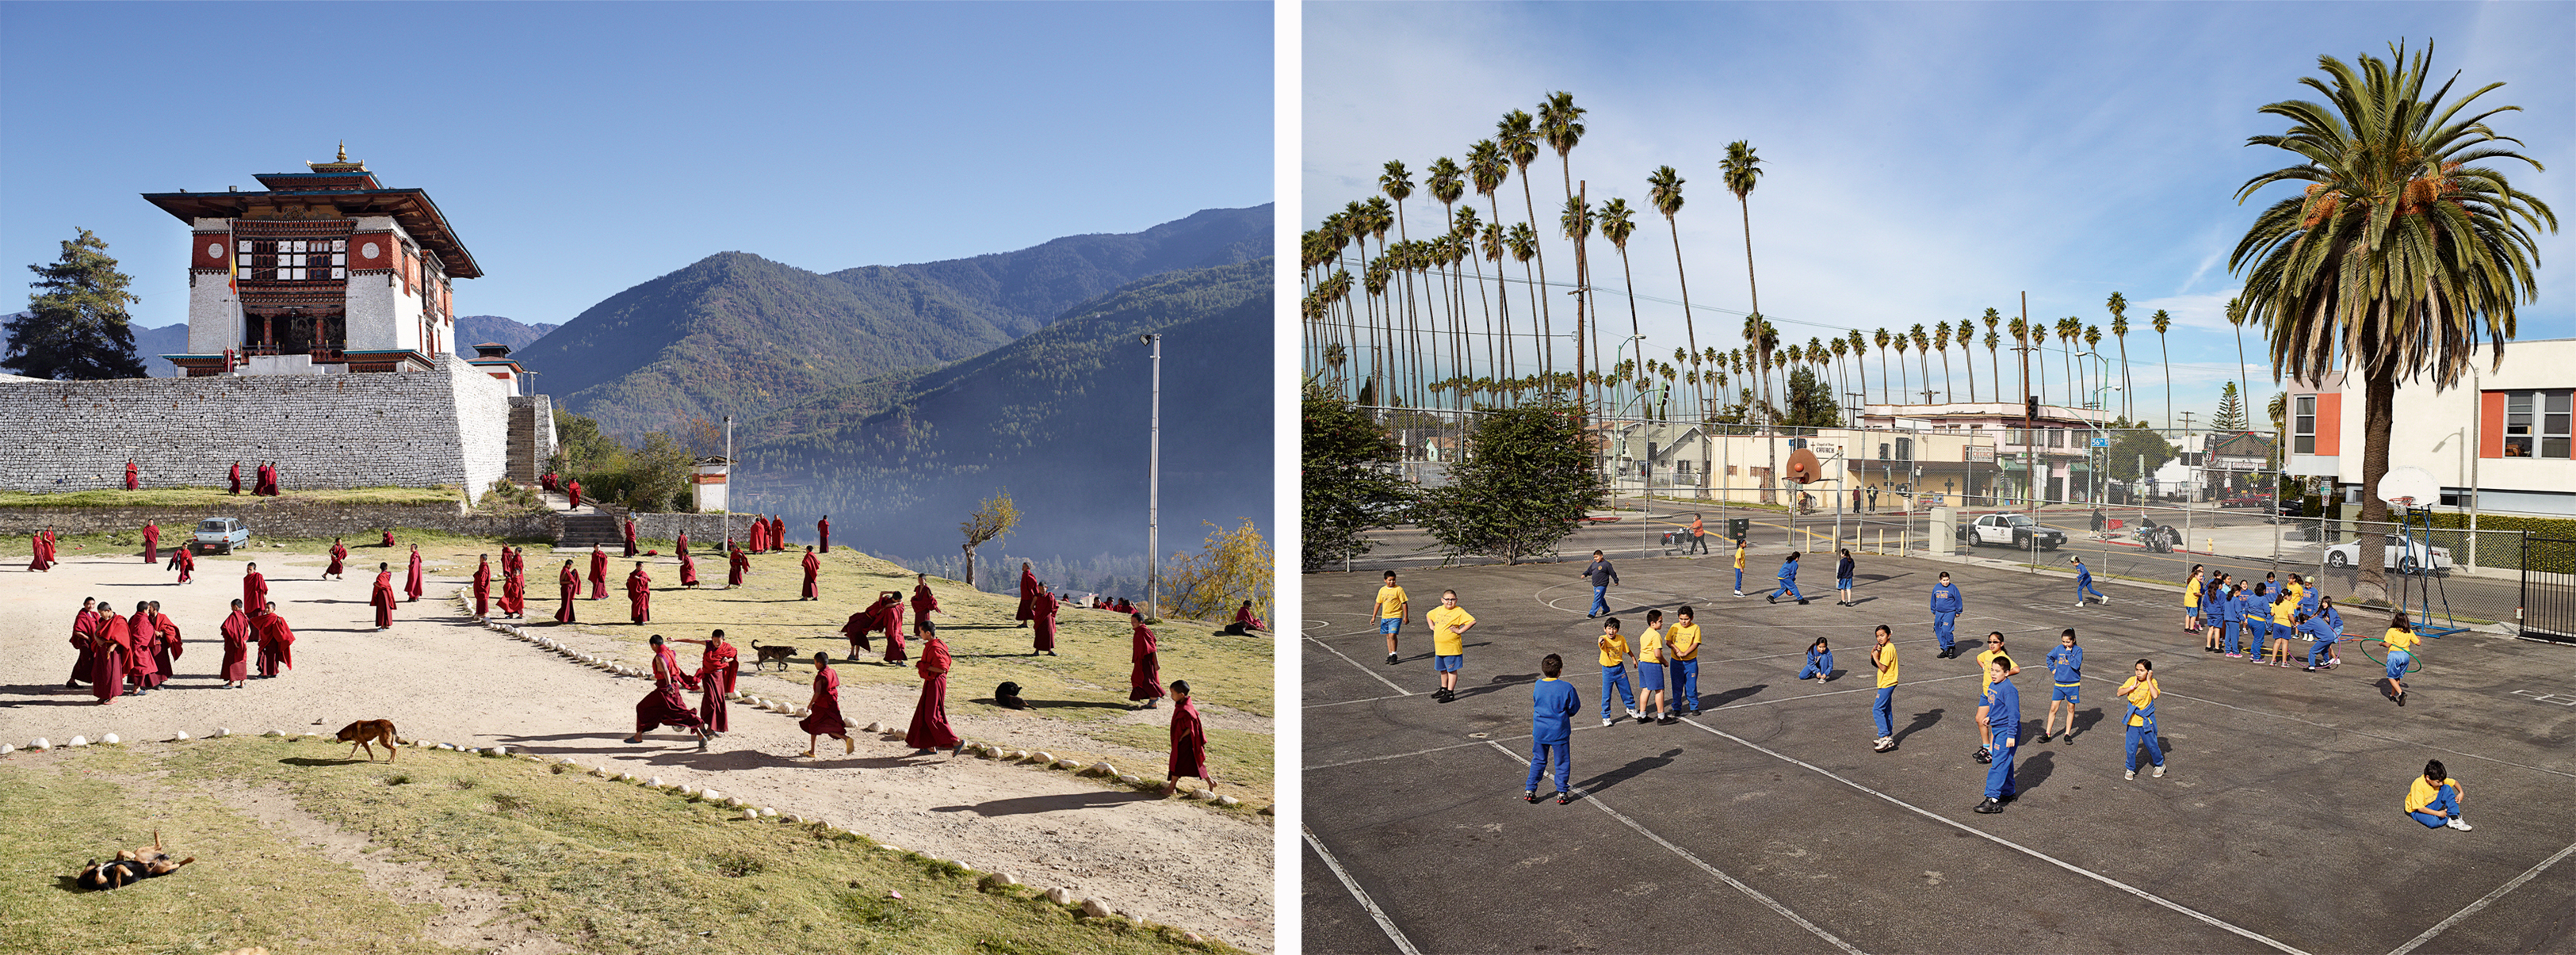 Links: Bhutan, Dechen Prodrang, Thimphu. Rechts: Verenigde Staten, Nativity School, Los Angeles. 